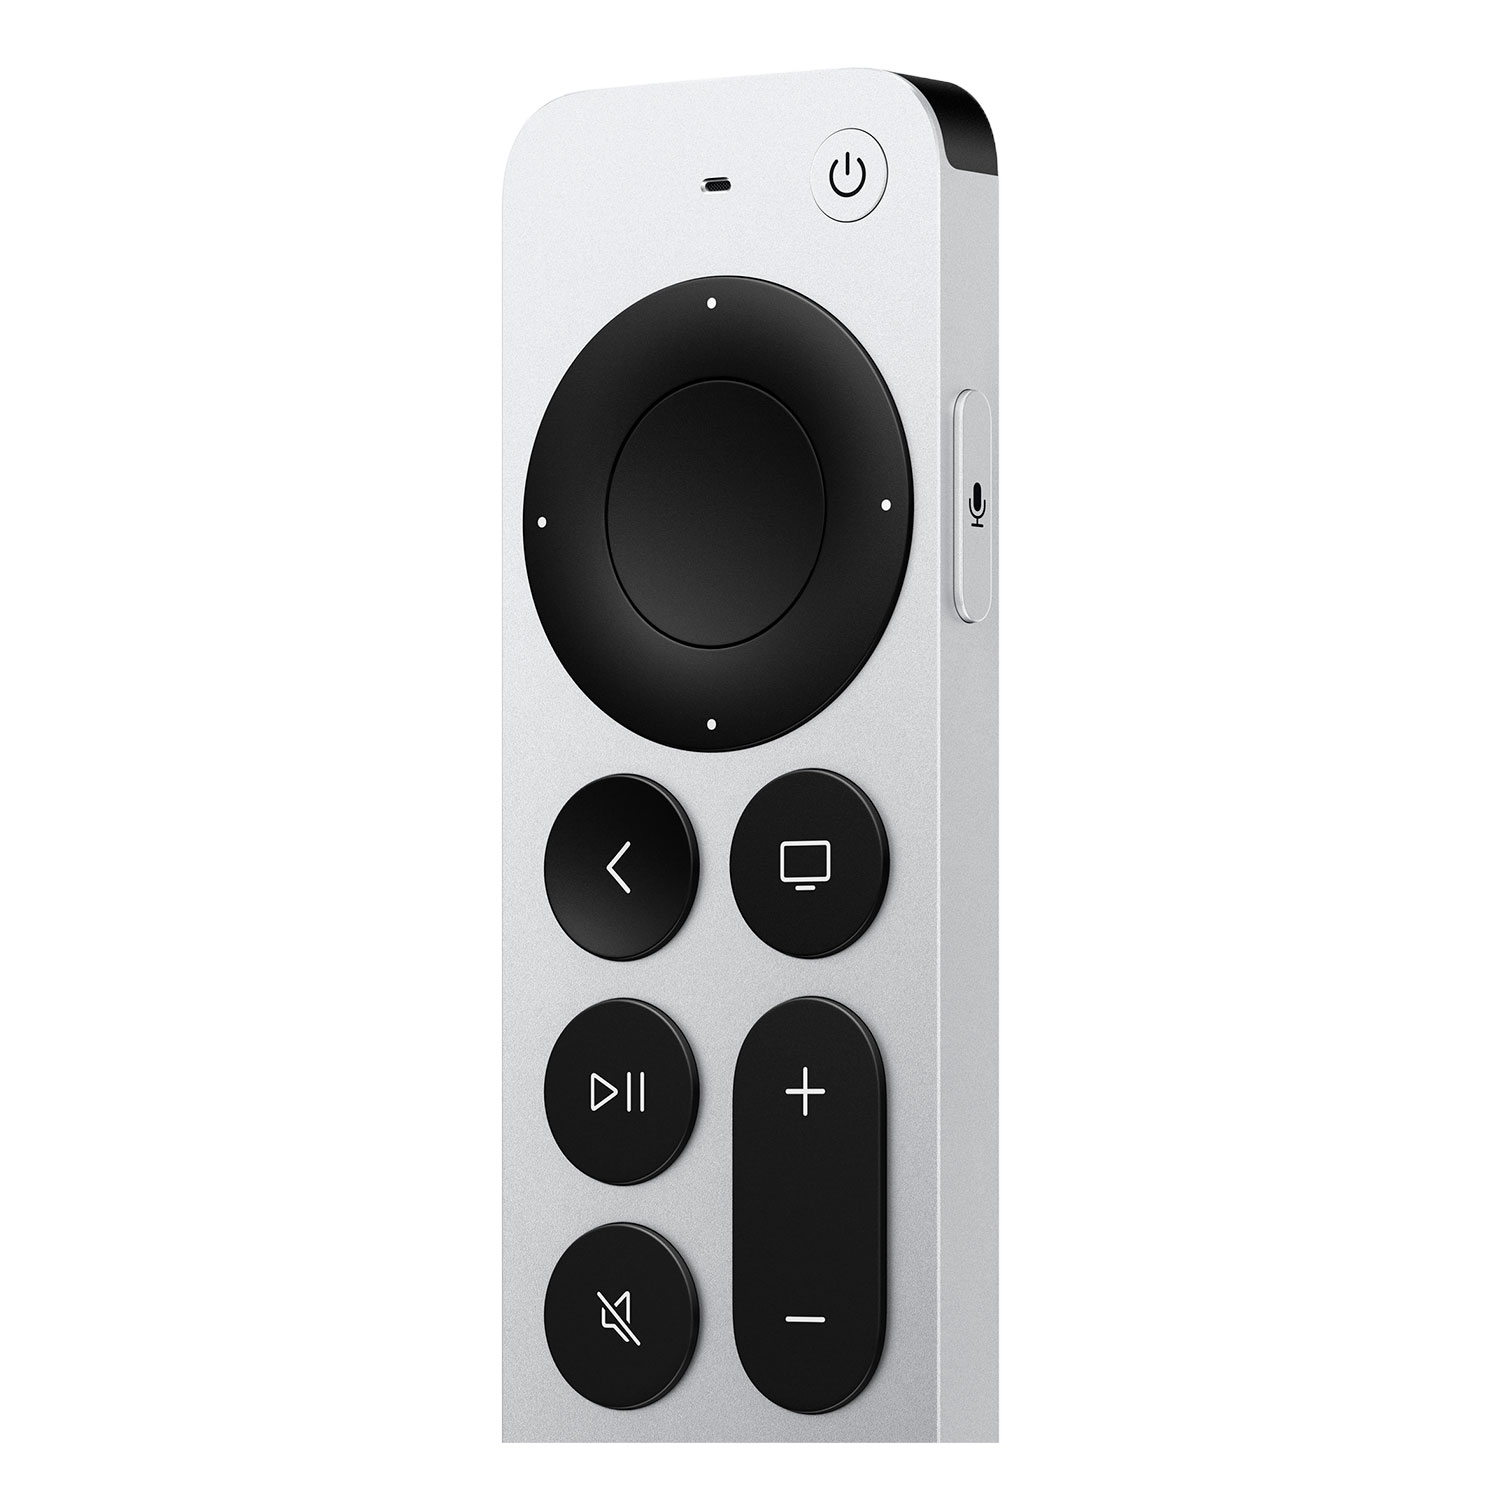 Apple TV MN873LL/A 3th Geração 64GB  / 4K / Wifi / HDMI / Bluetooth -Preto